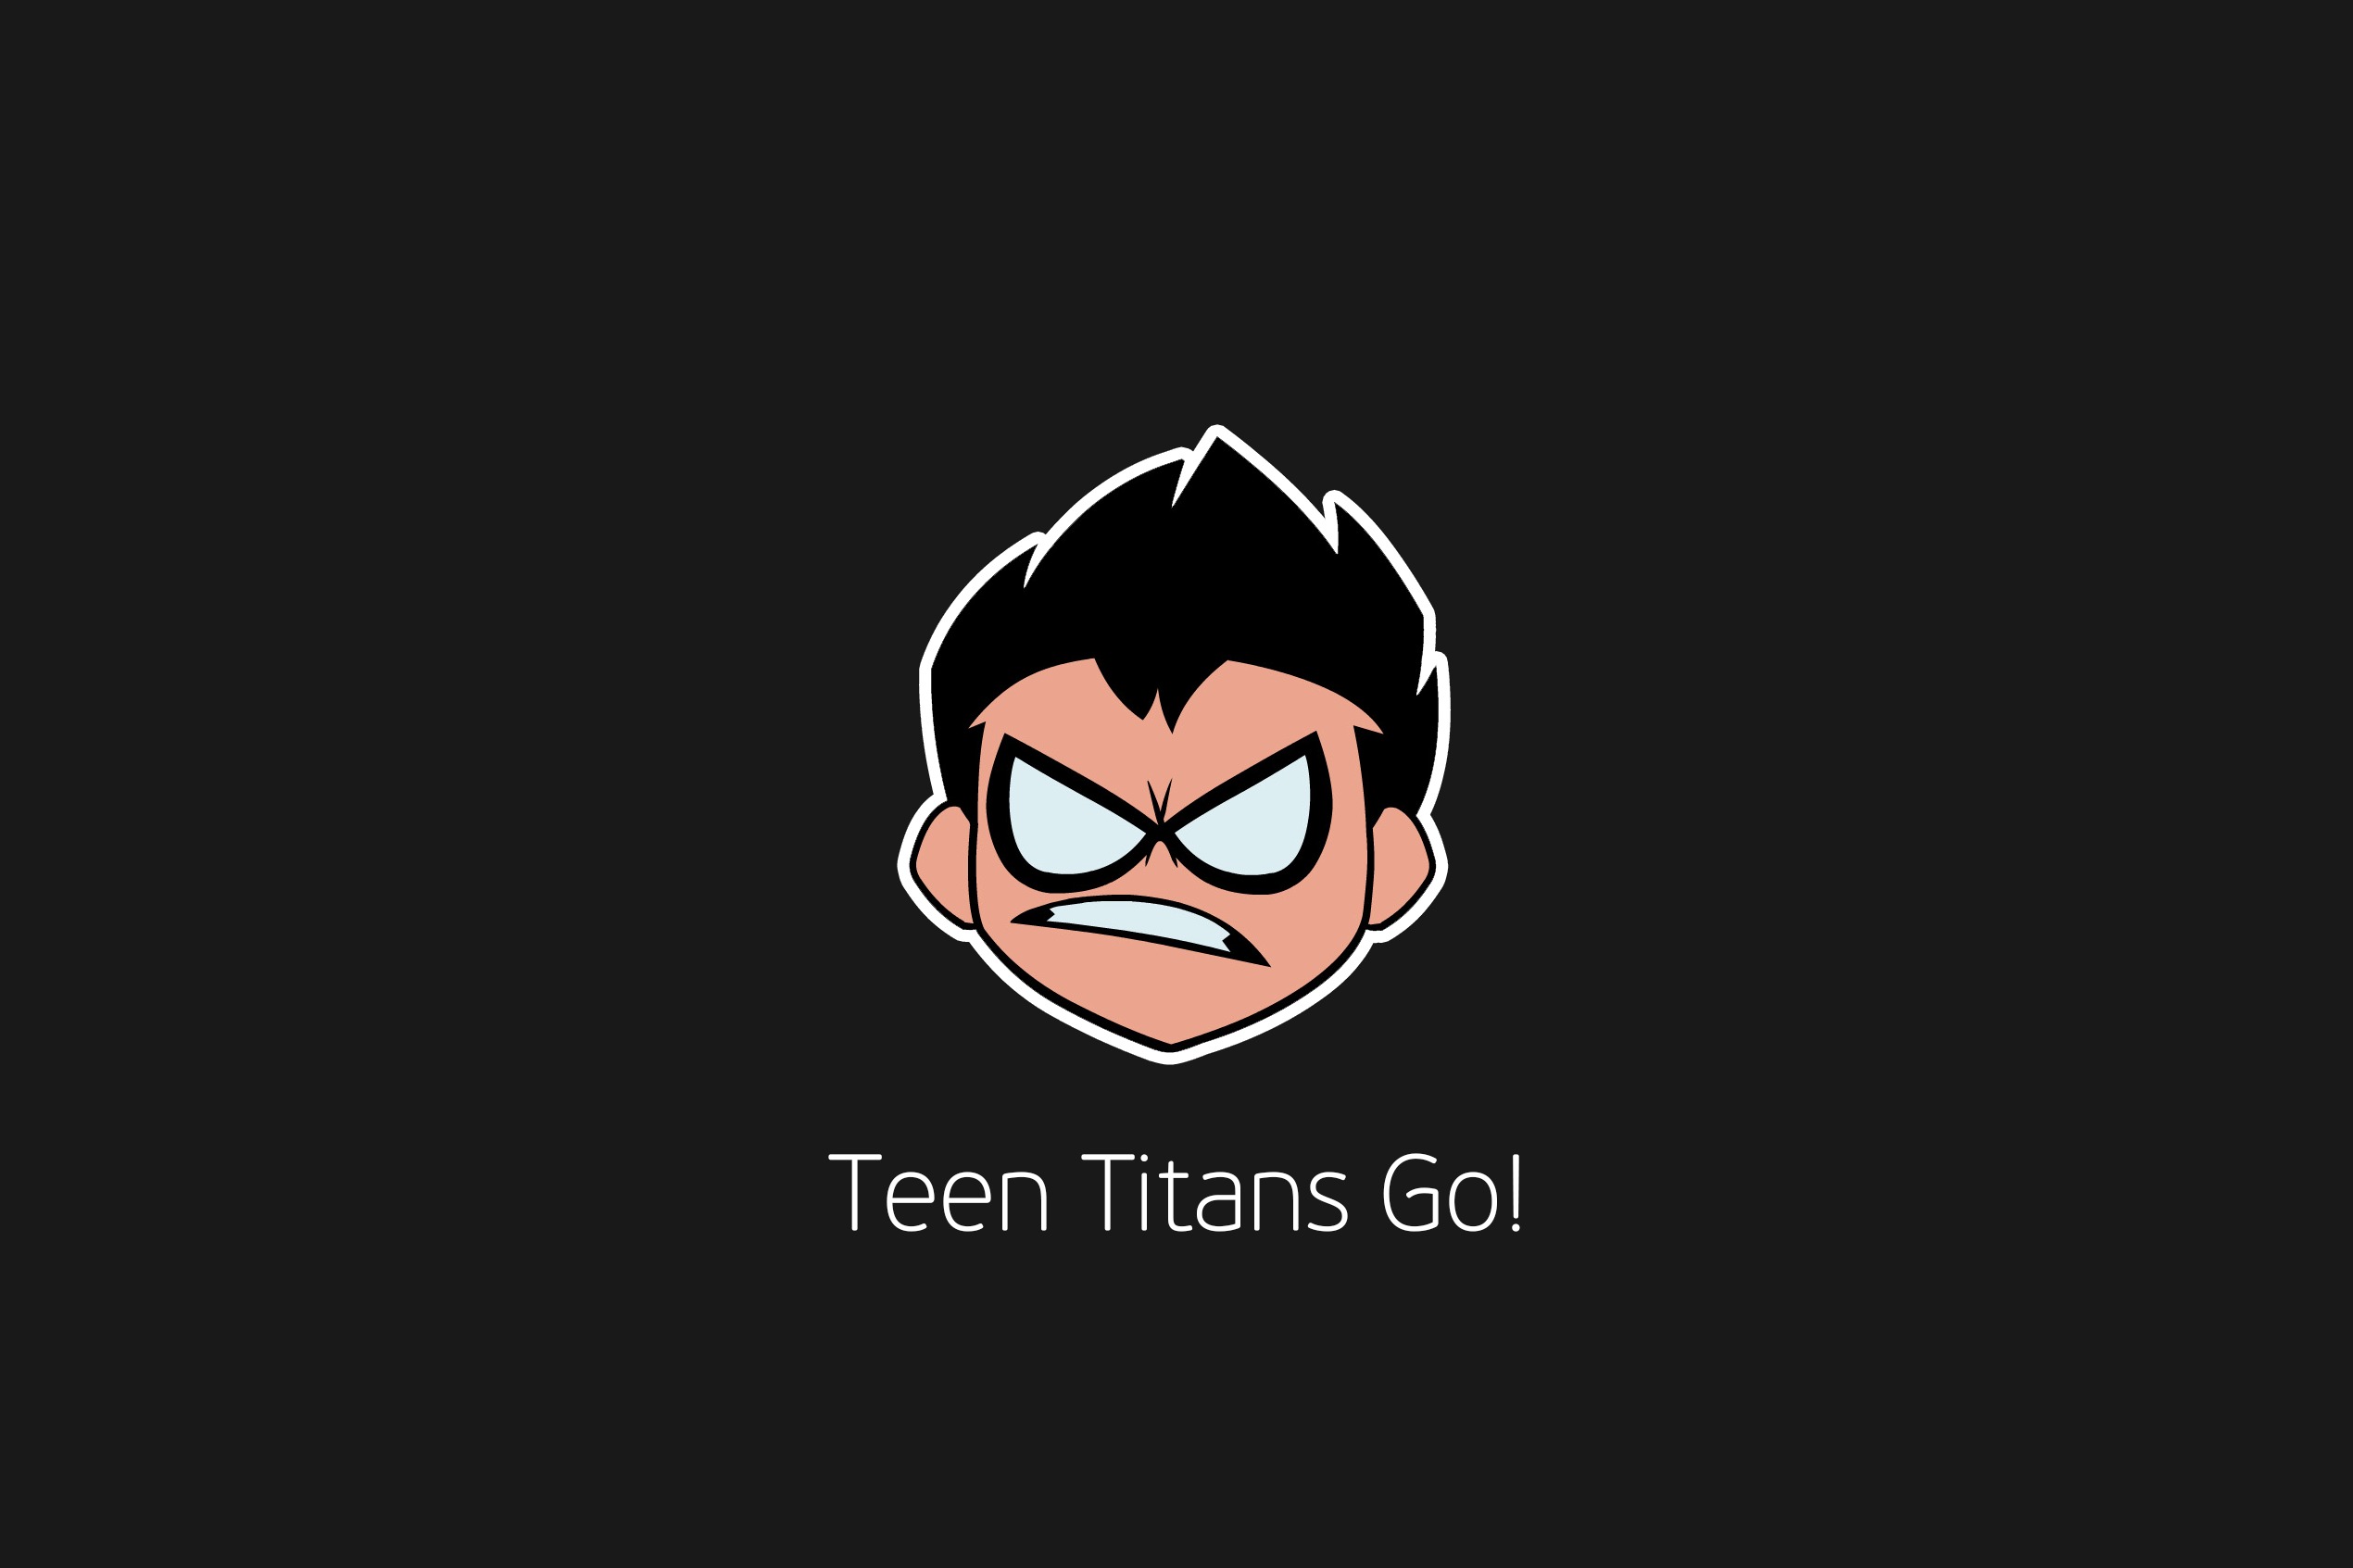 Download wallpaper Cartoon Network, TTG, Teen Titans Go!, TeenTitans Go, section minimalism in resolution 2540x1693